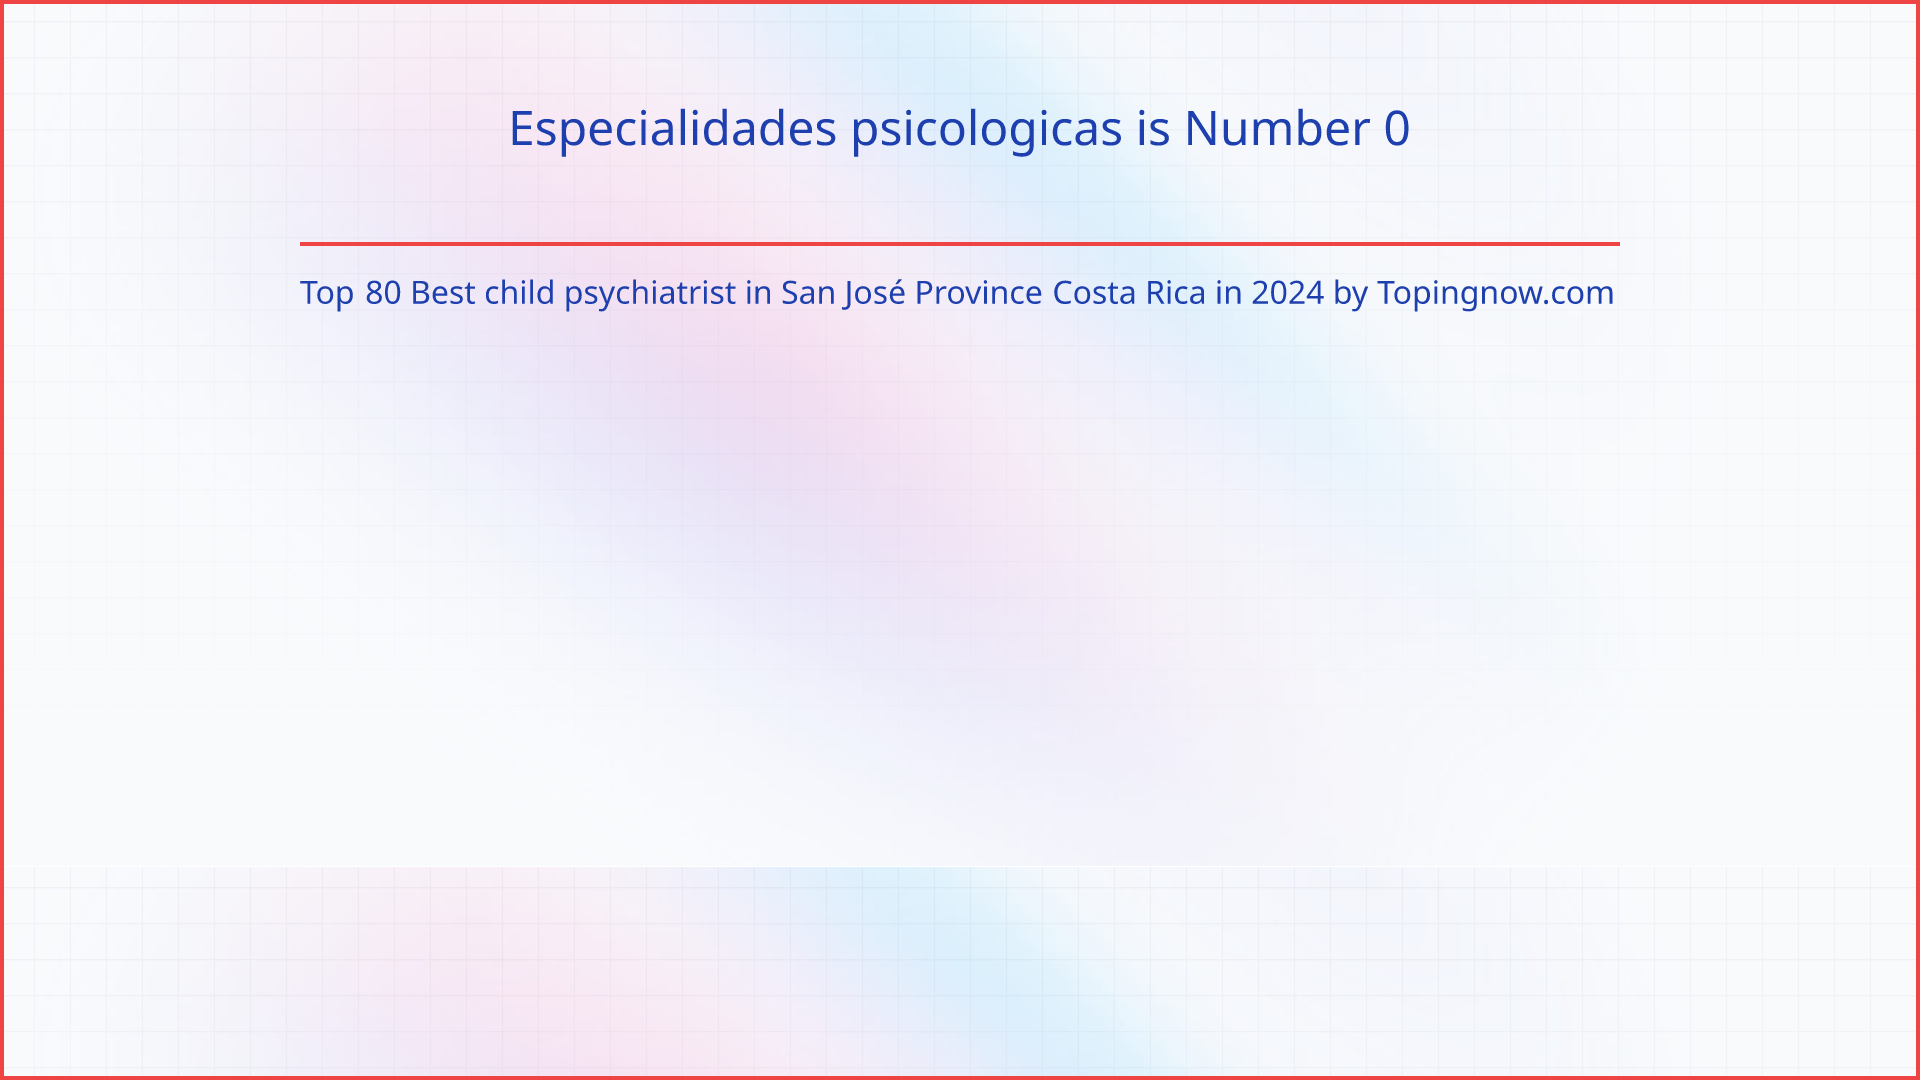 Especialidades psicologicas: Top 80 Best child psychiatrist in San José Province Costa Rica in 2024